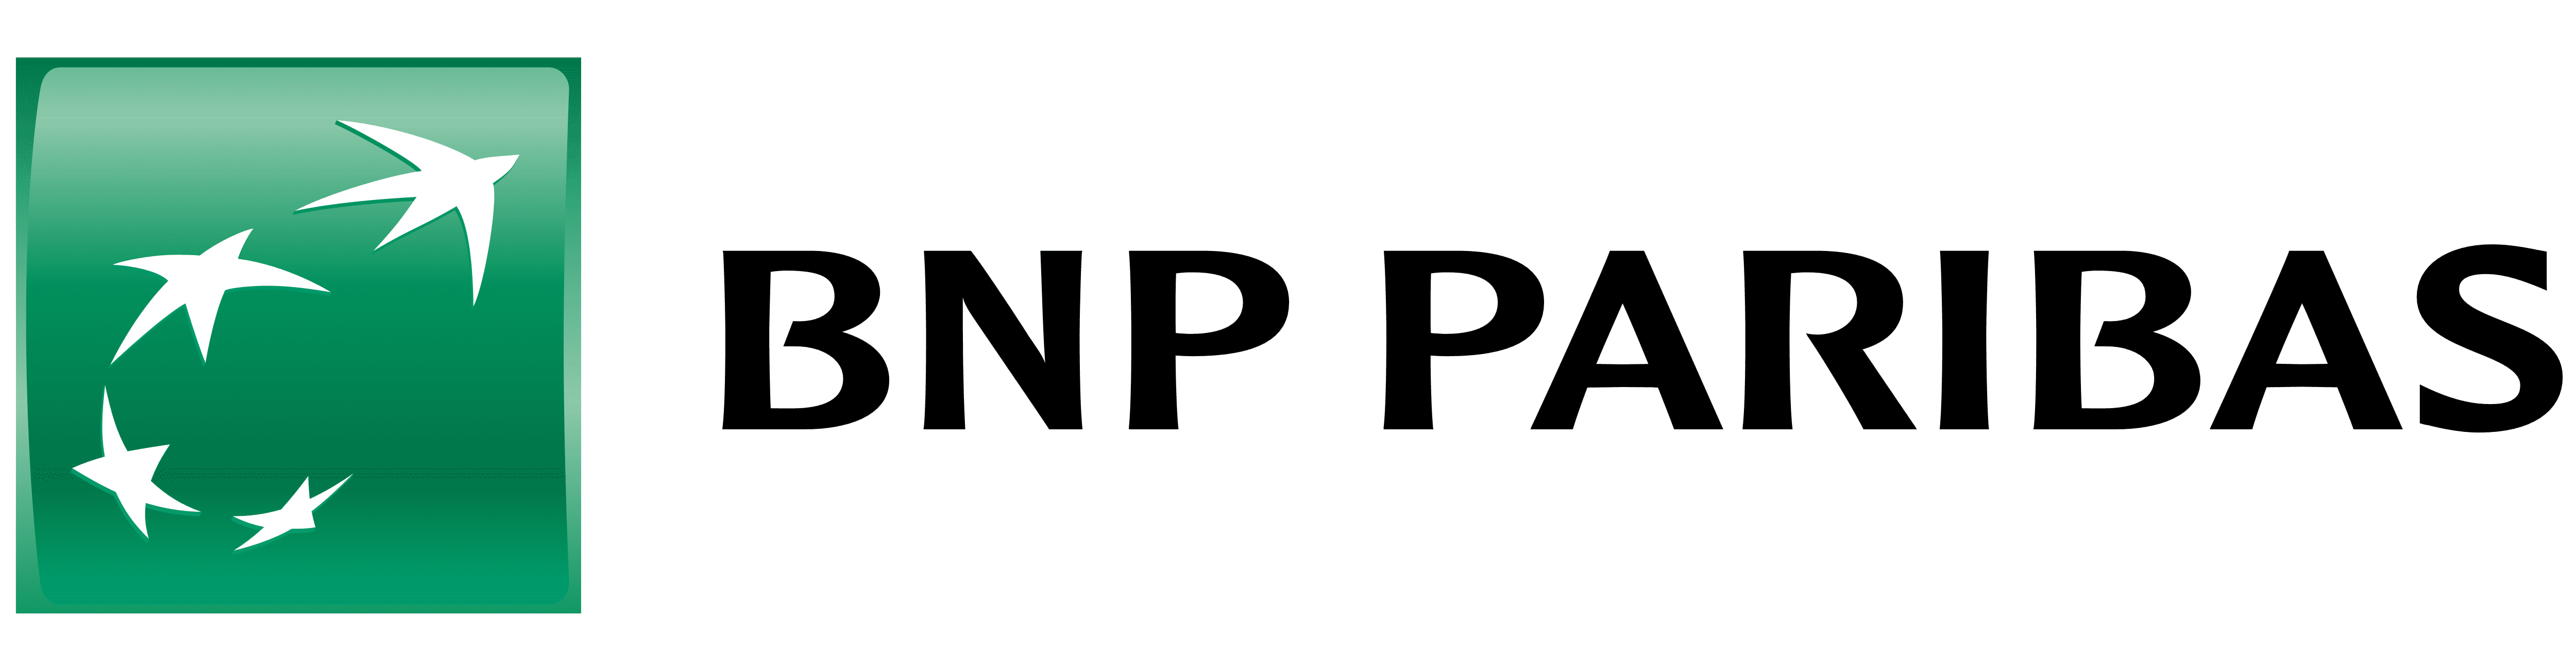 BNP-Paribas-logo-2